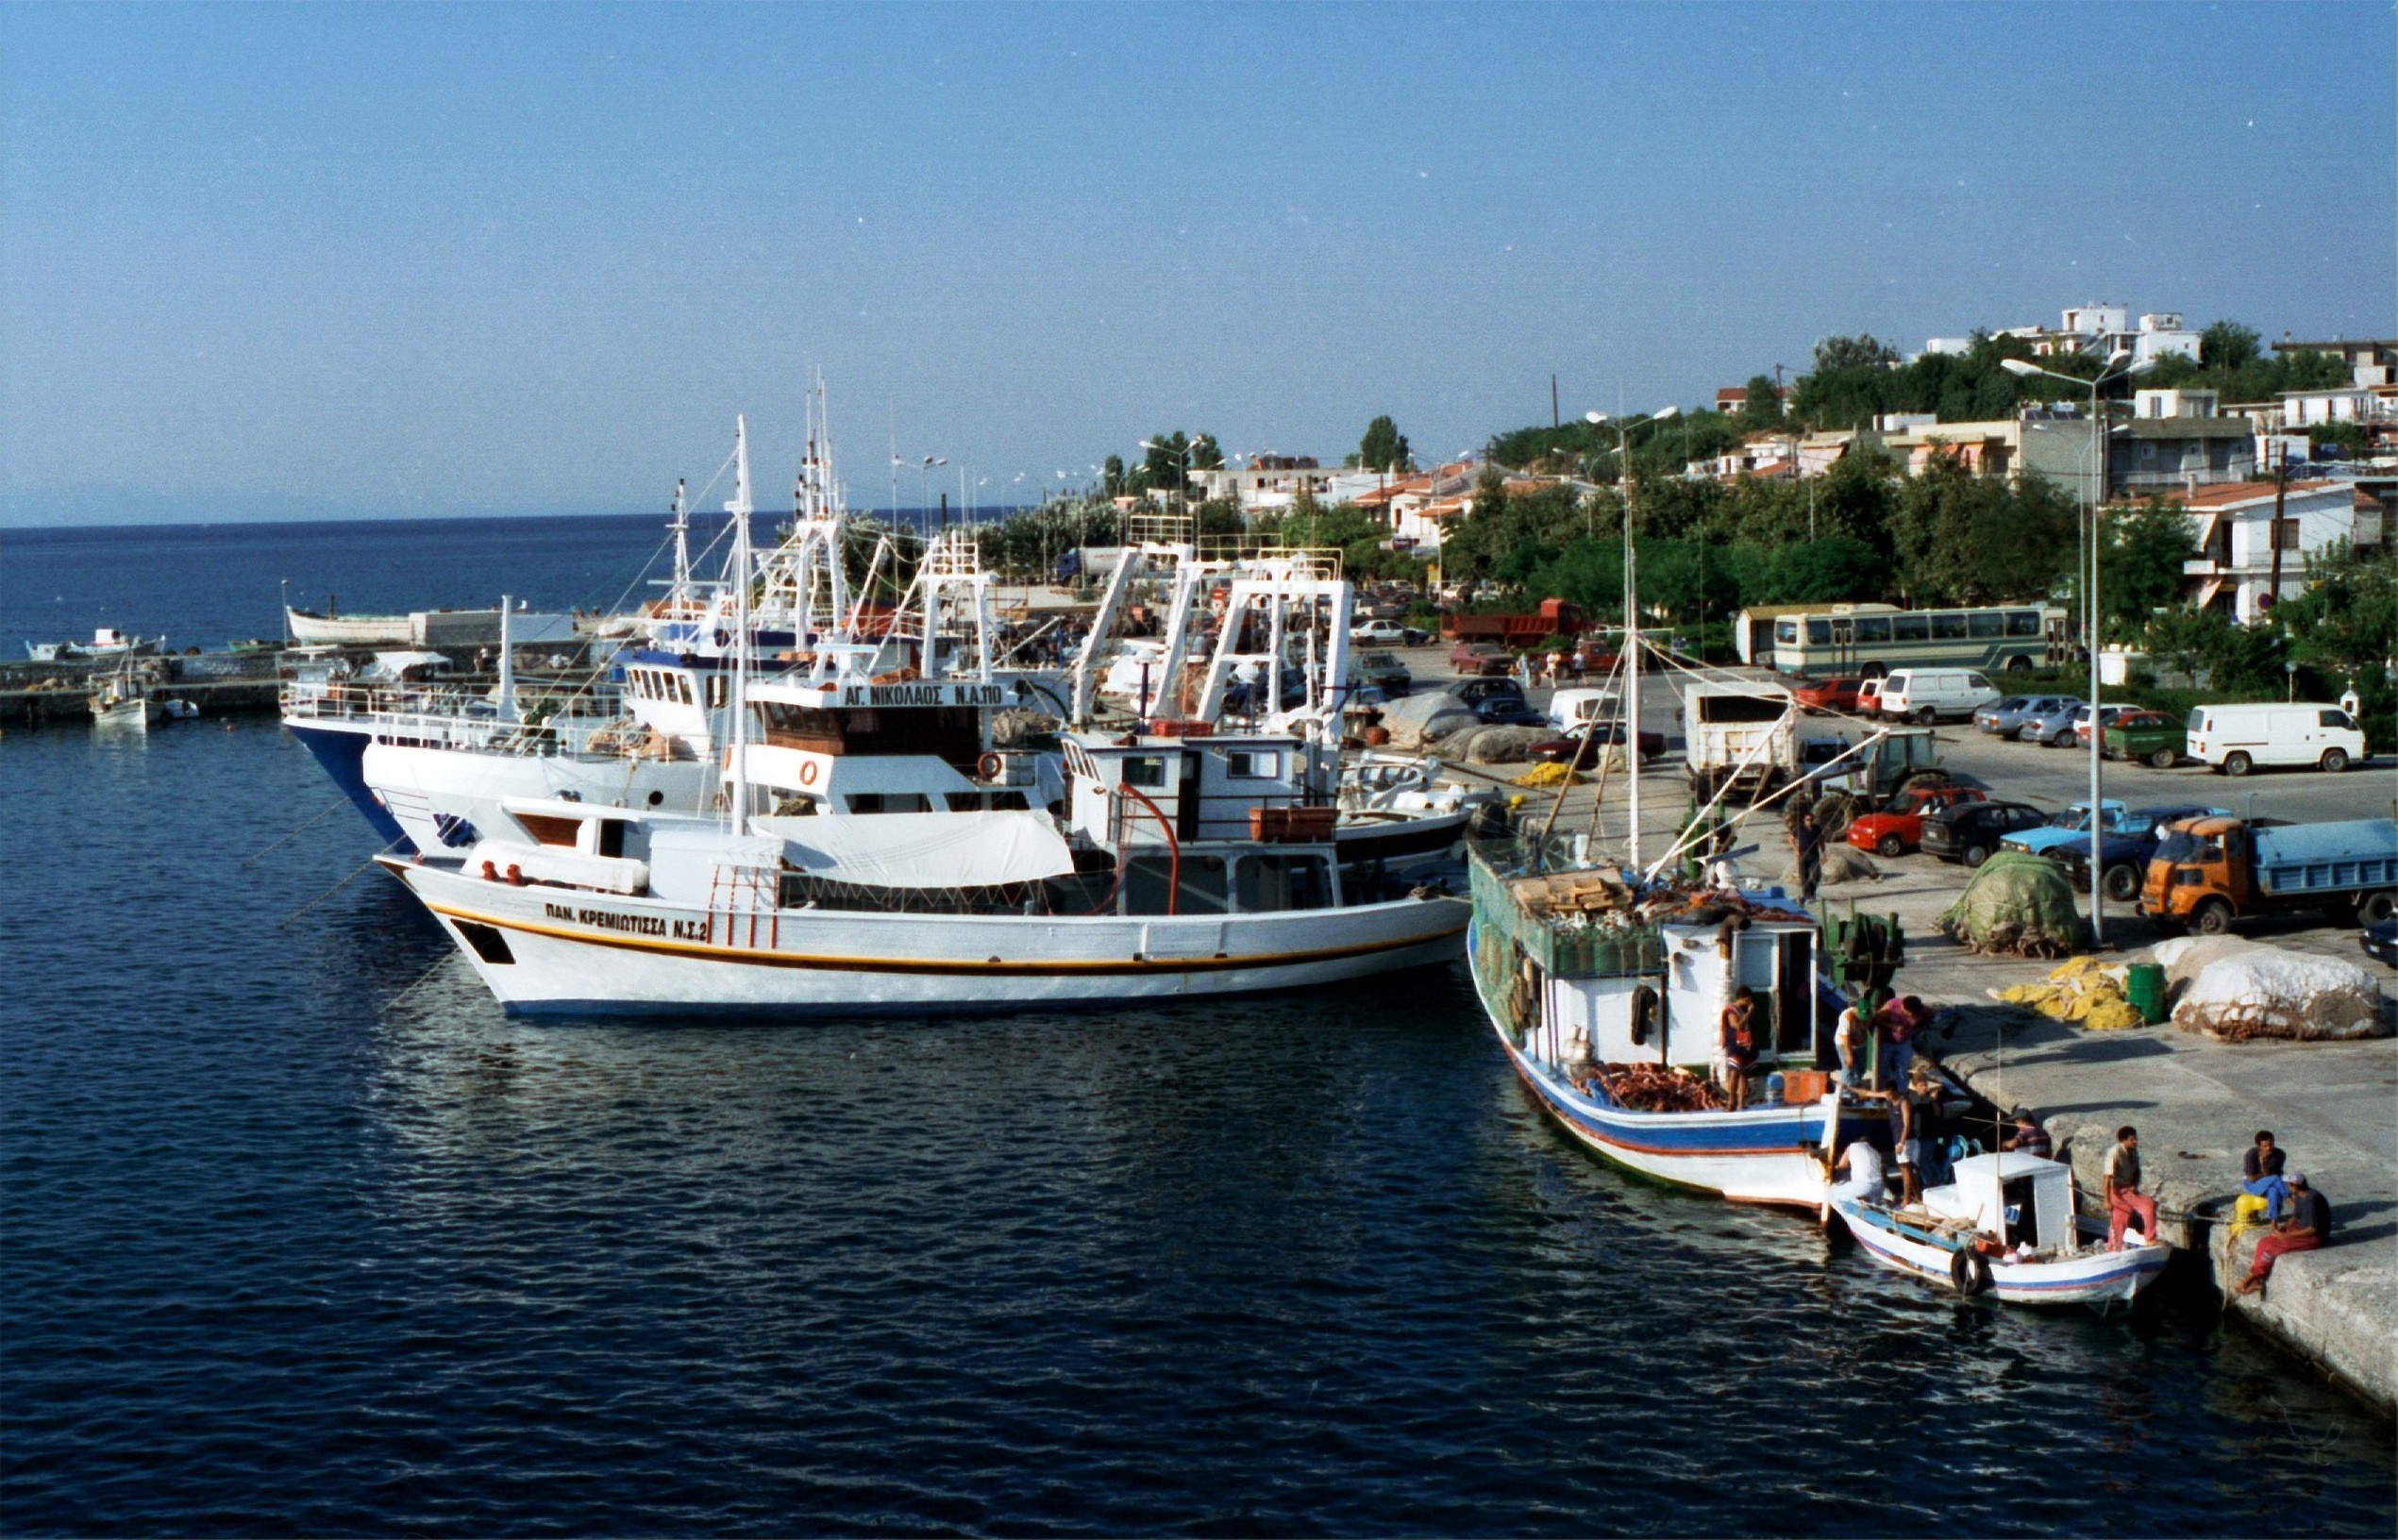 File:Fishing-boats-port-samothraki.jpg - Wikimedia Commons